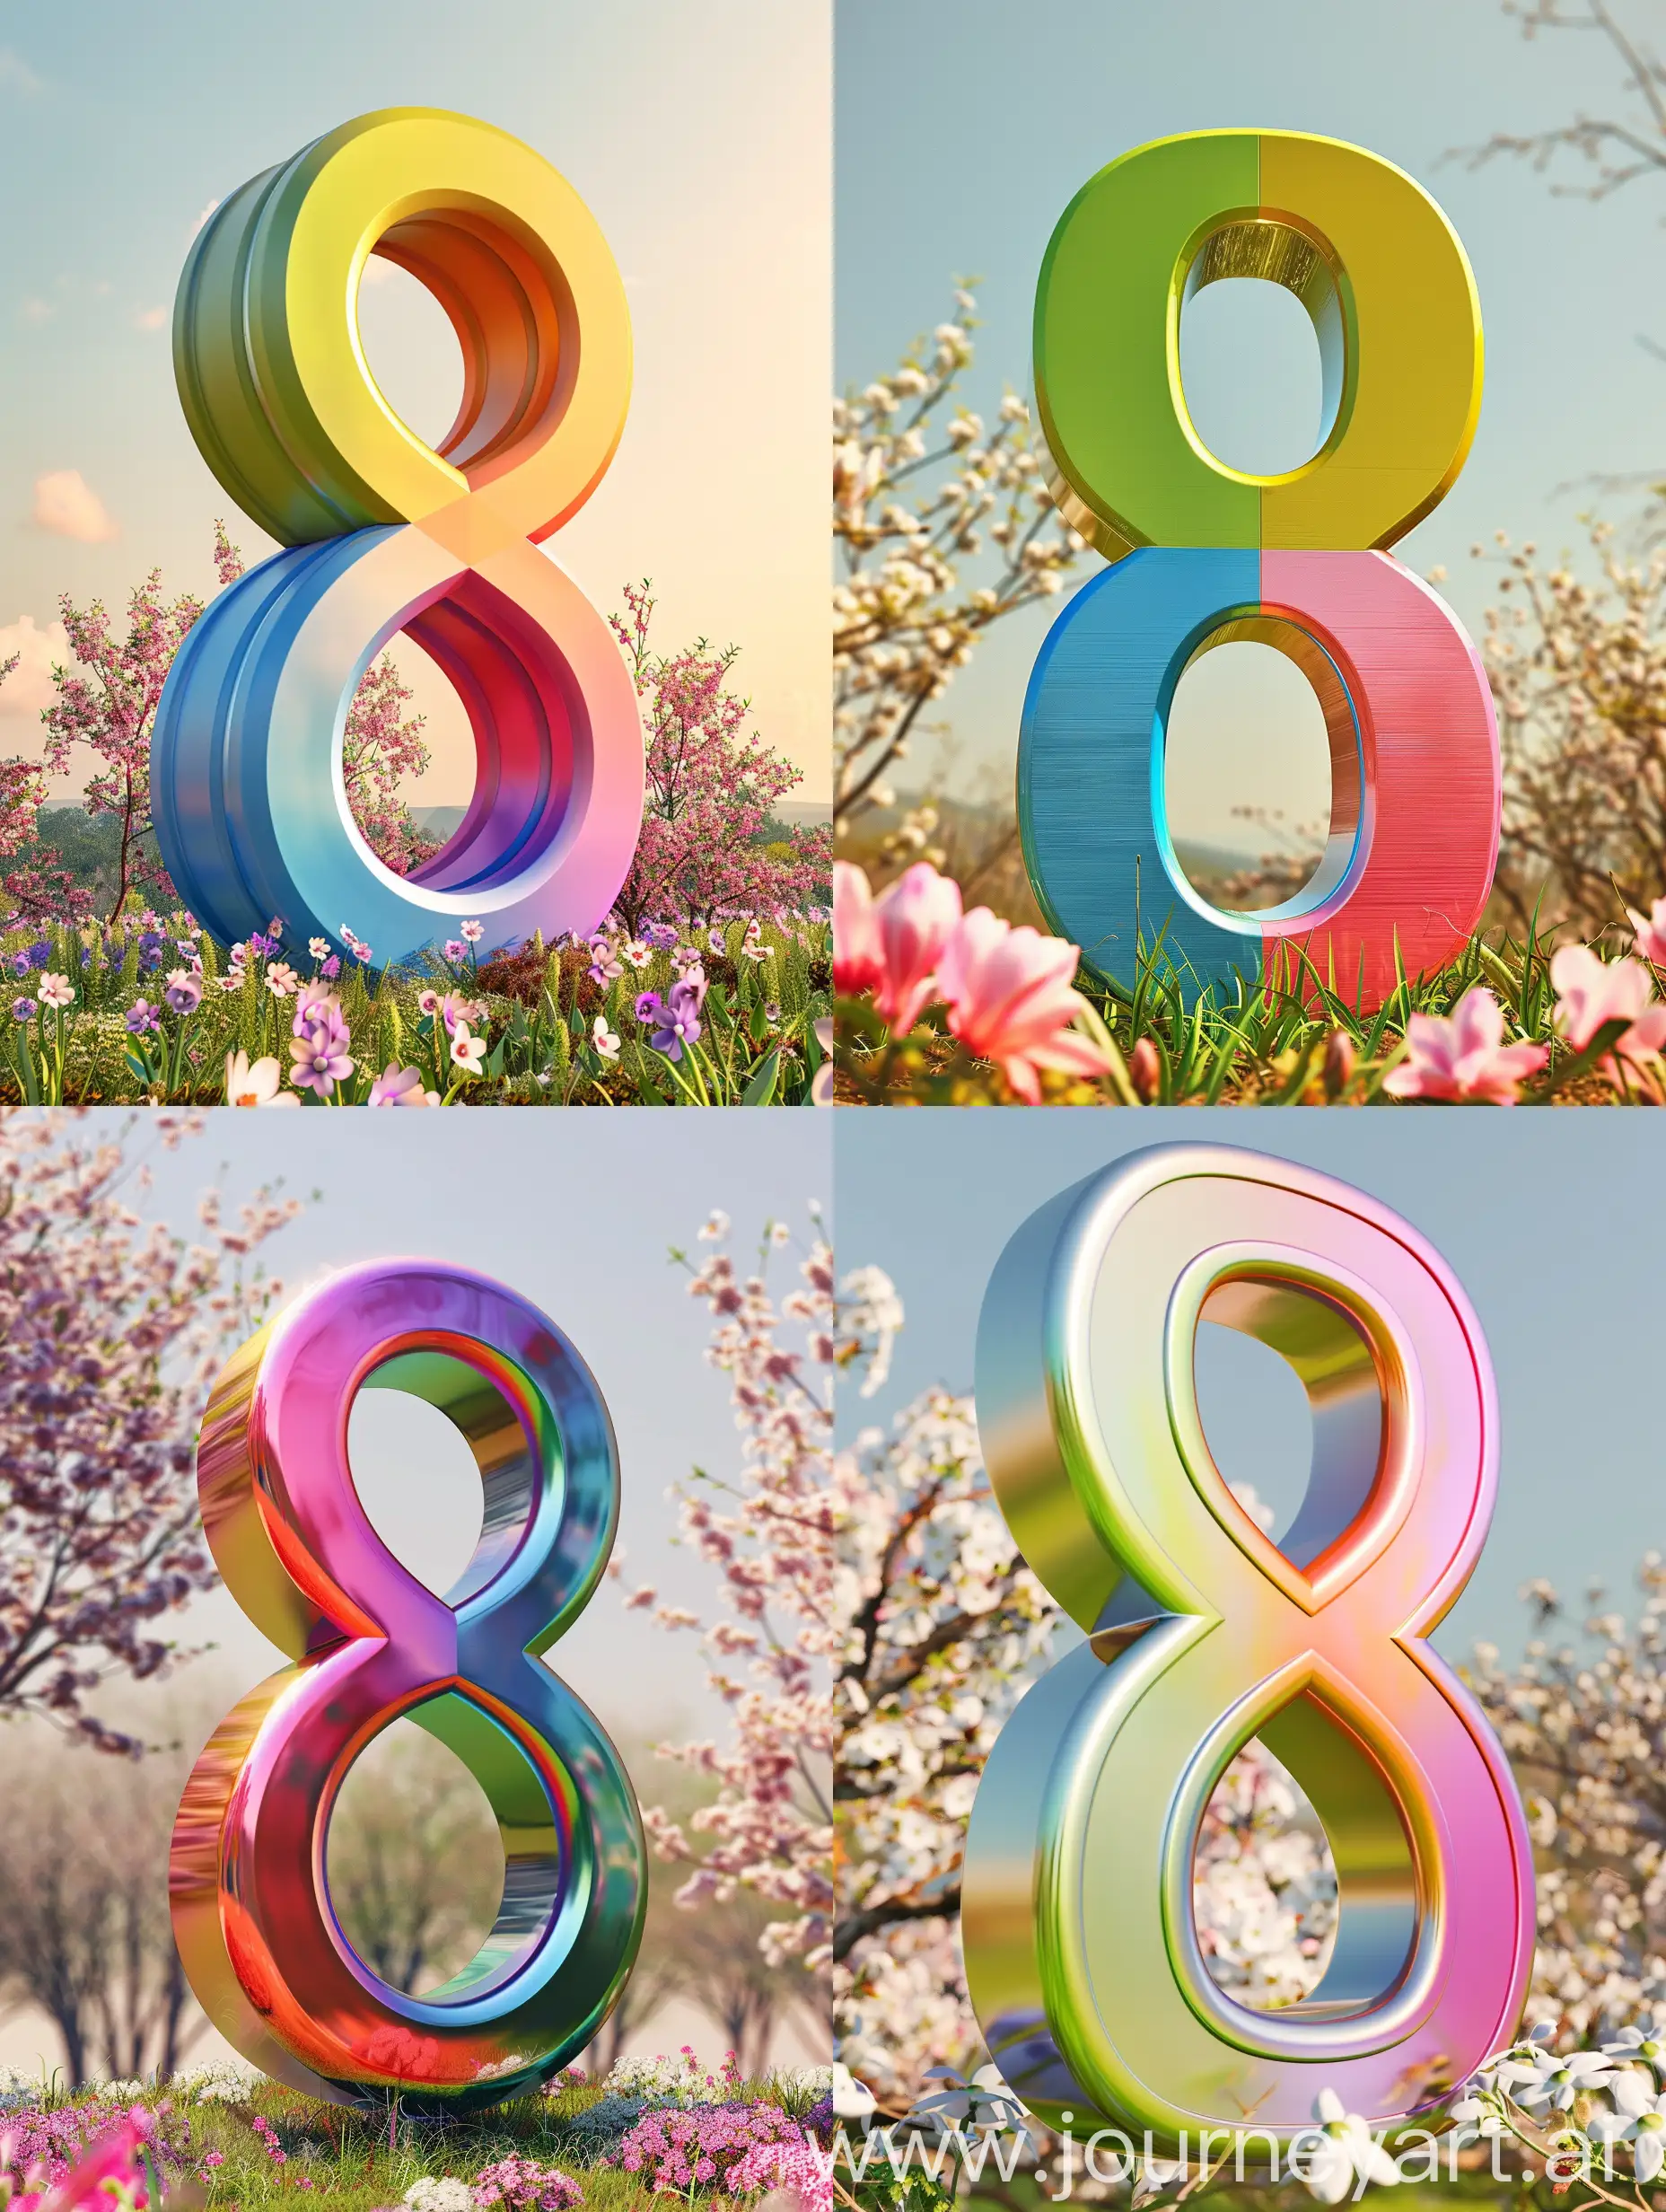 Vibrant-Realistic-Number-8-Designs-in-Spring-Landscape